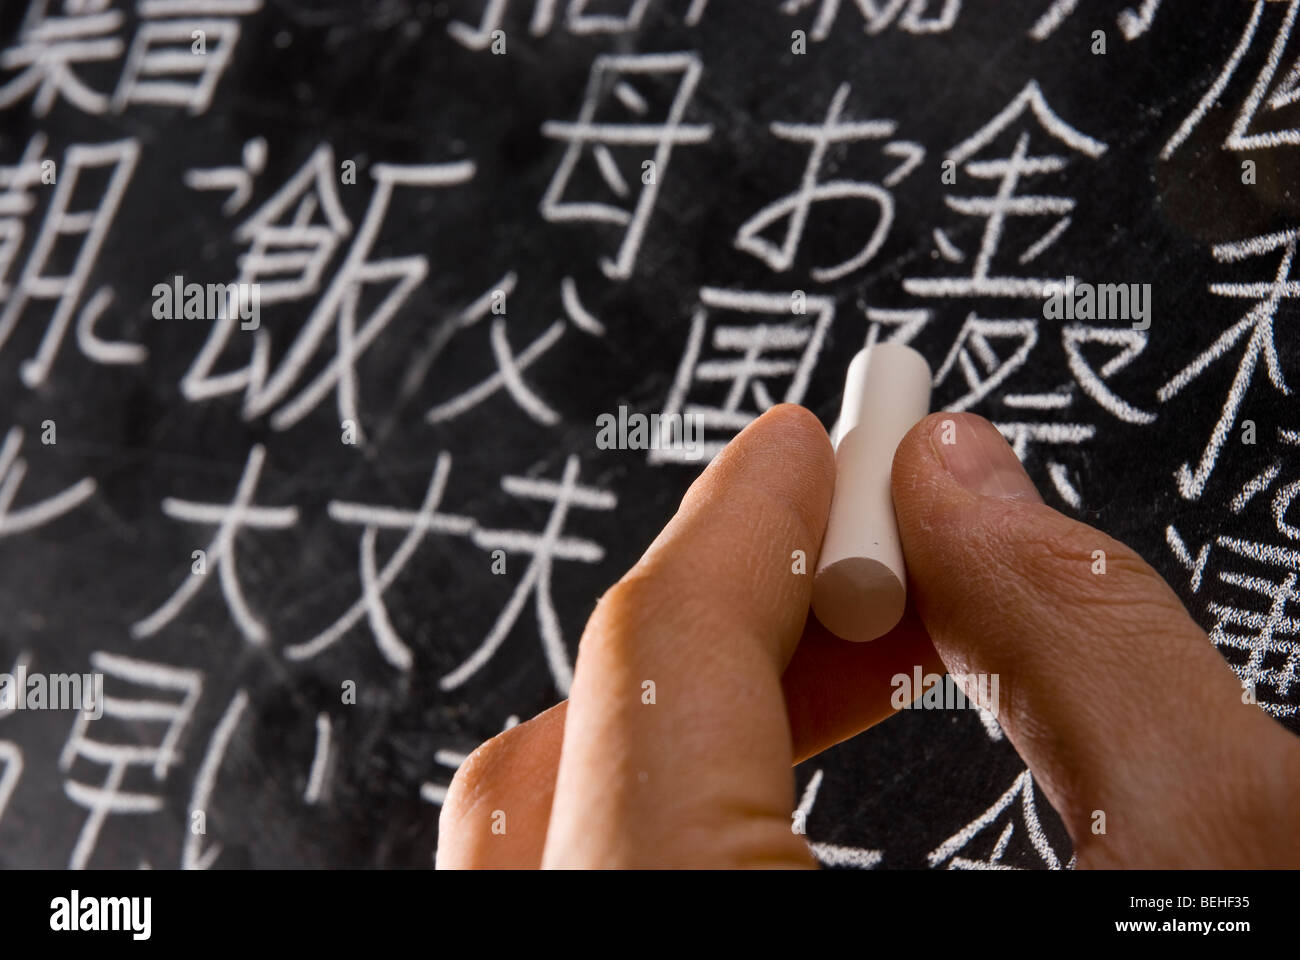 Chalk written kanji characters showing random words. Stock Photo